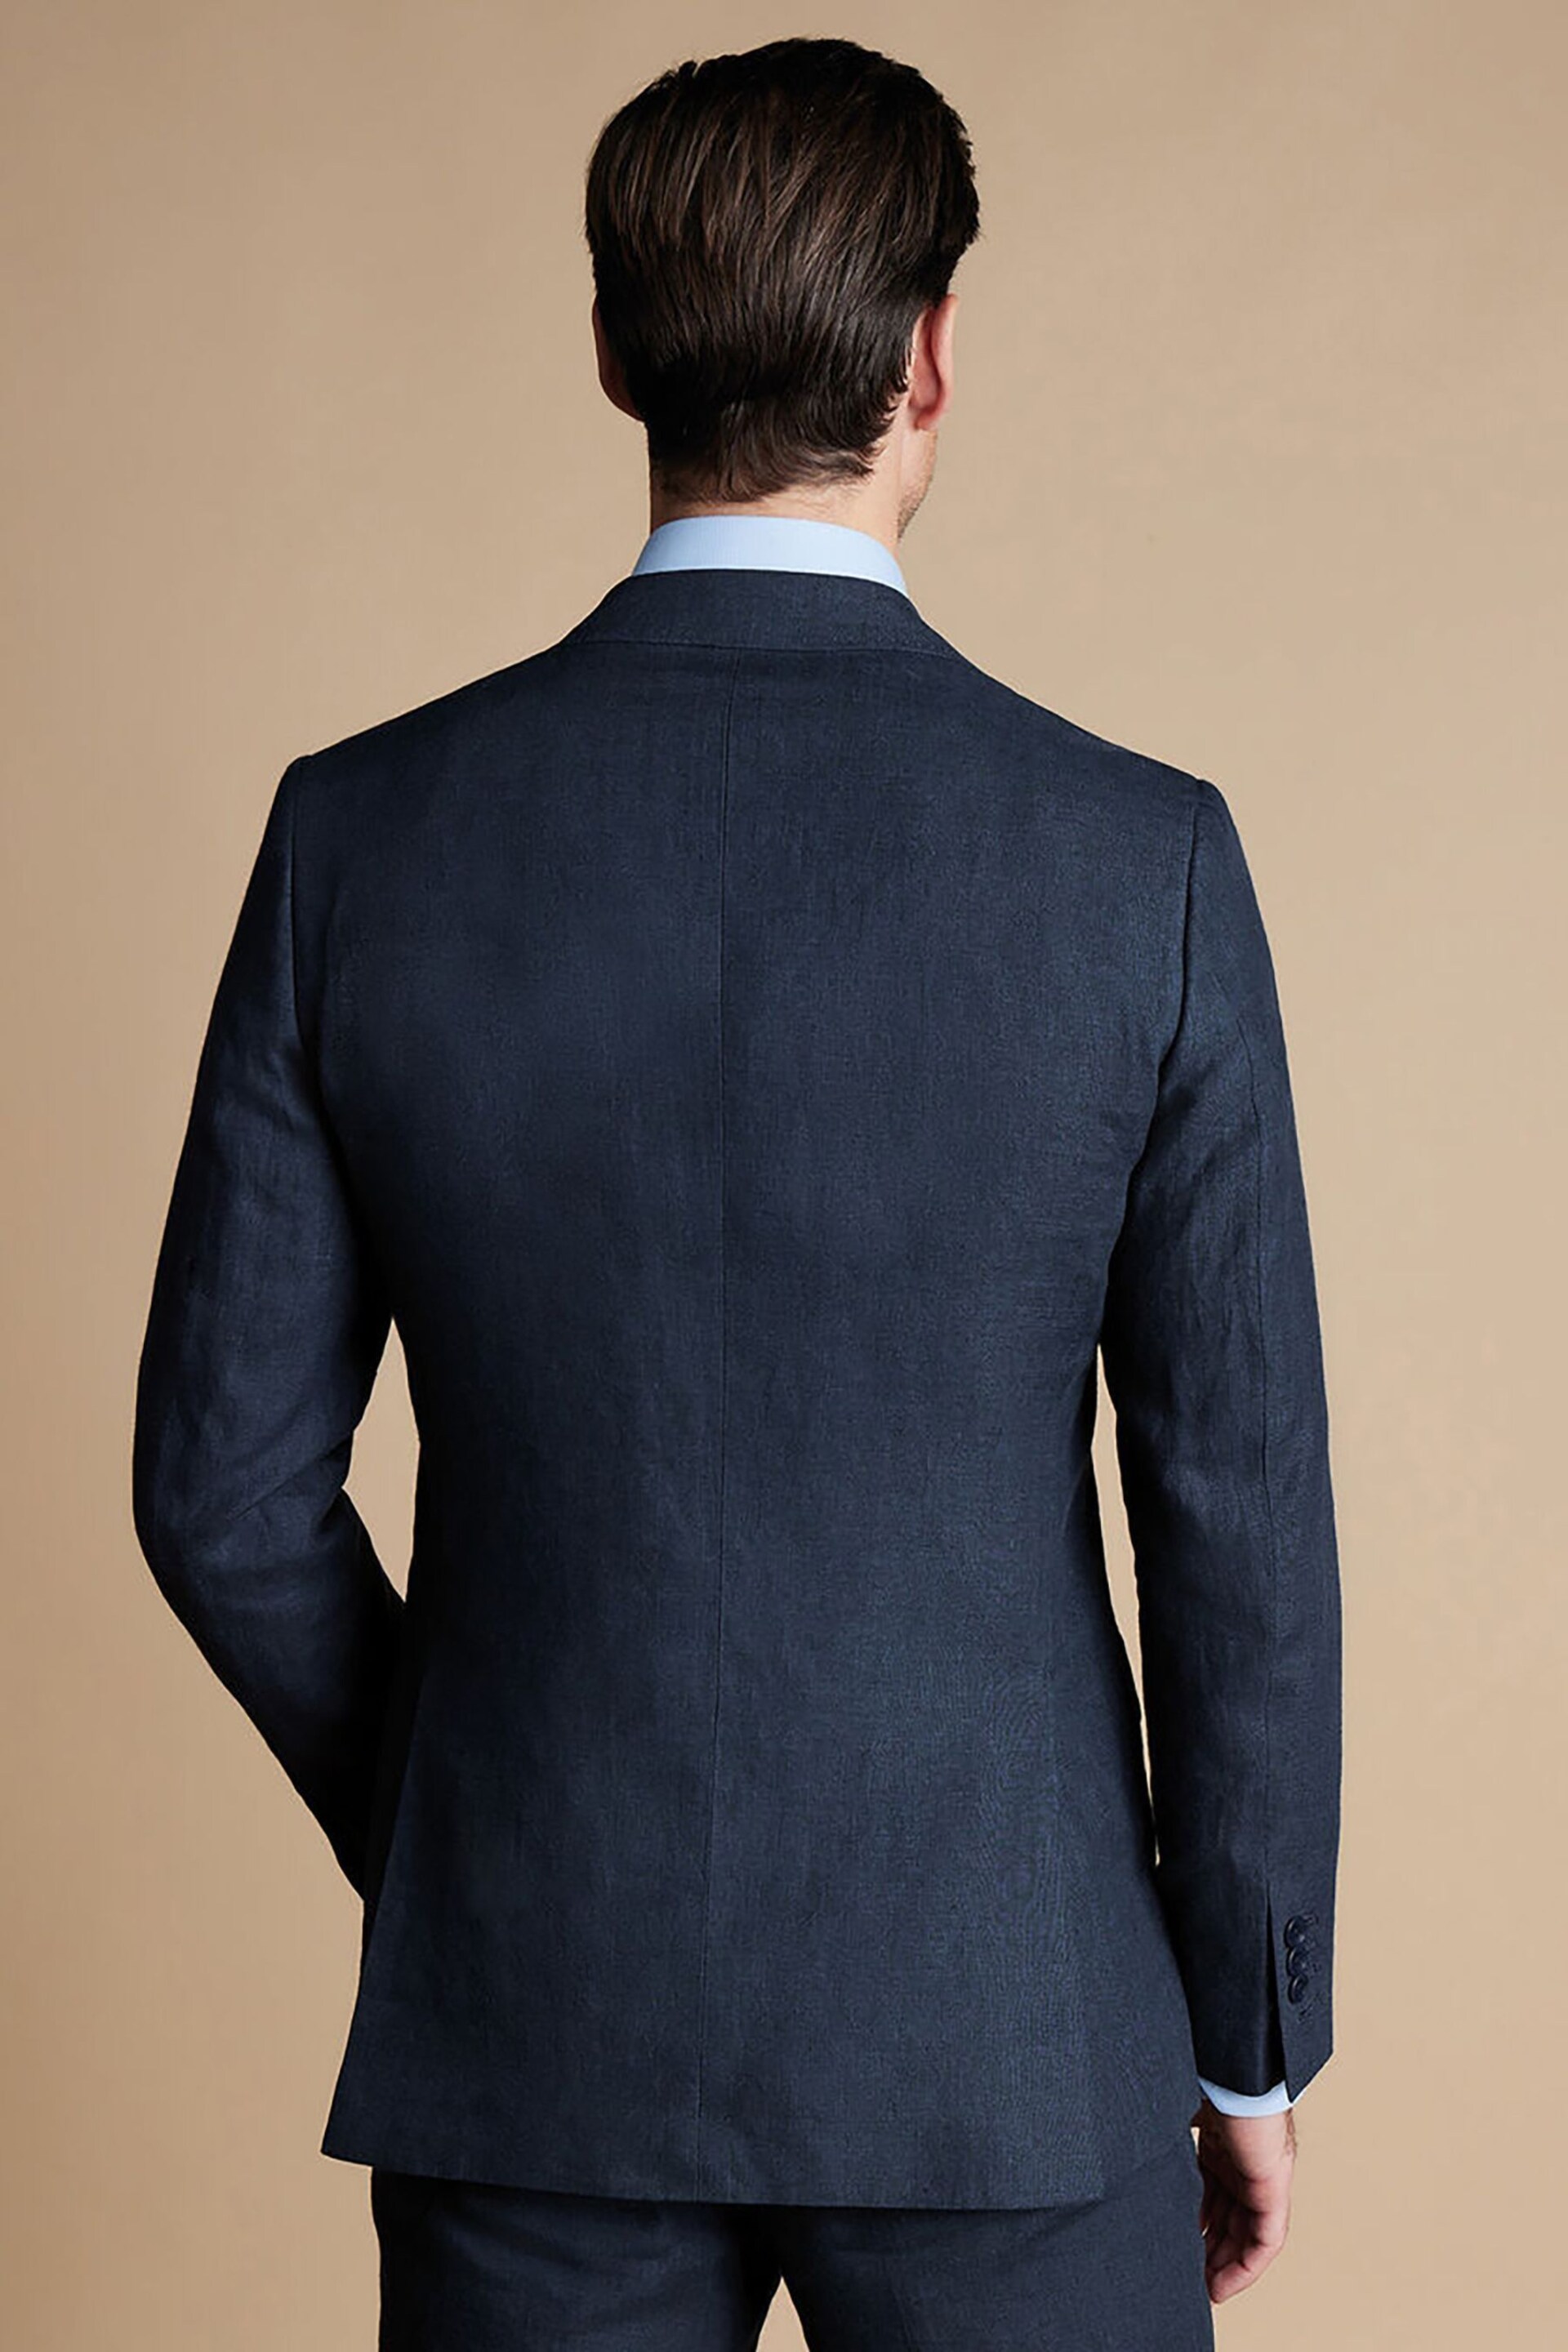 Charles Tyrwhitt Blue Linen Classic Fit Jacket - Image 3 of 5